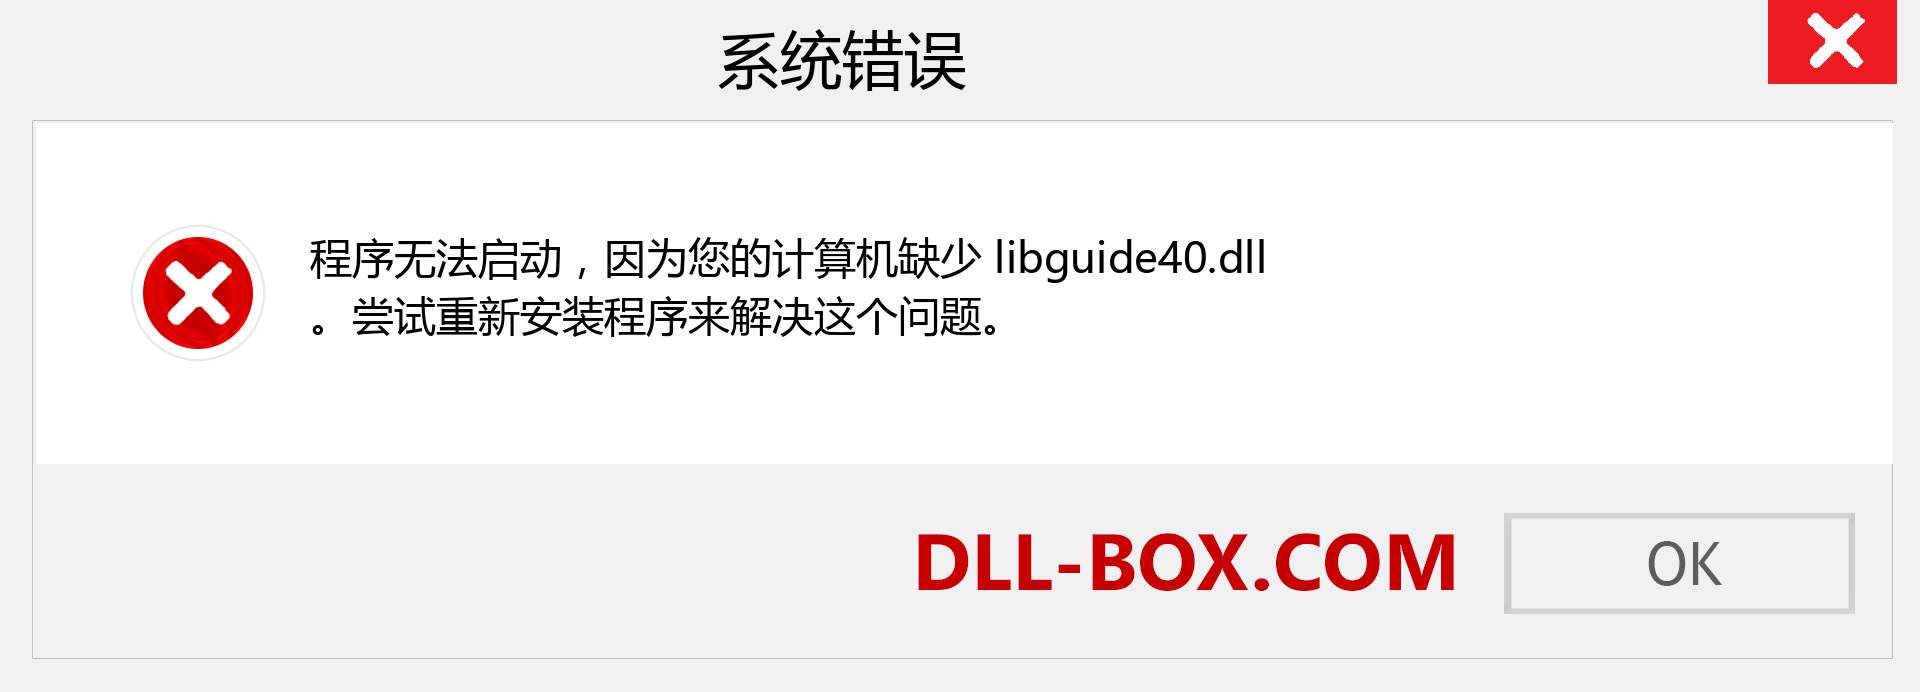 libguide40.dll 文件丢失？。 适用于 Windows 7、8、10 的下载 - 修复 Windows、照片、图像上的 libguide40 dll 丢失错误